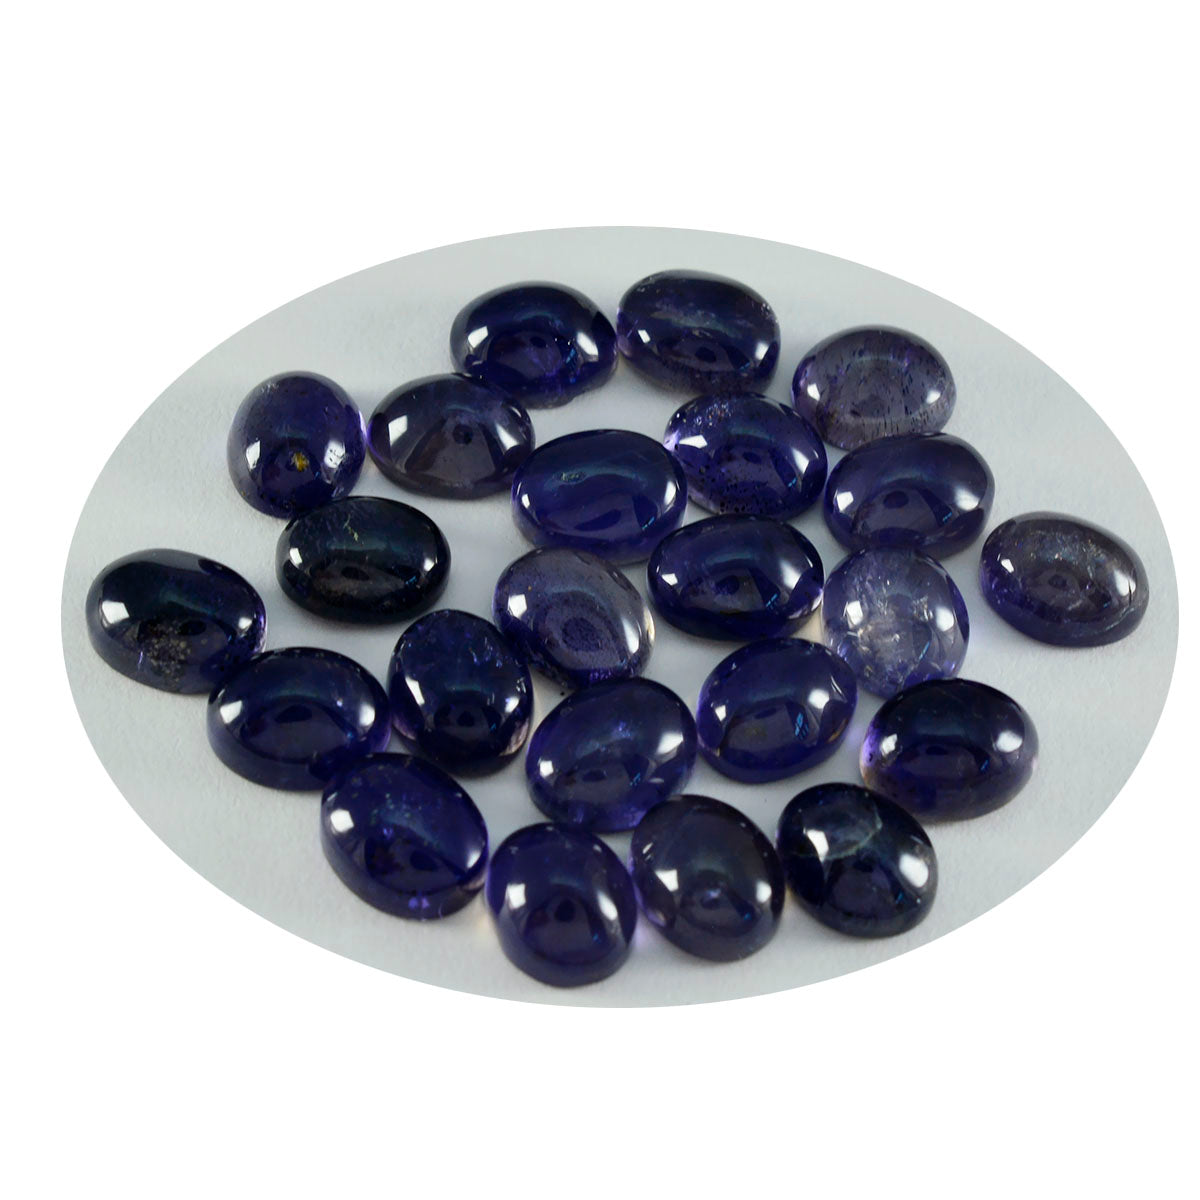 Riyogems 1PC Blue Iolite Cabochon 9x11 mm Oval Shape lovely Quality Loose Gems